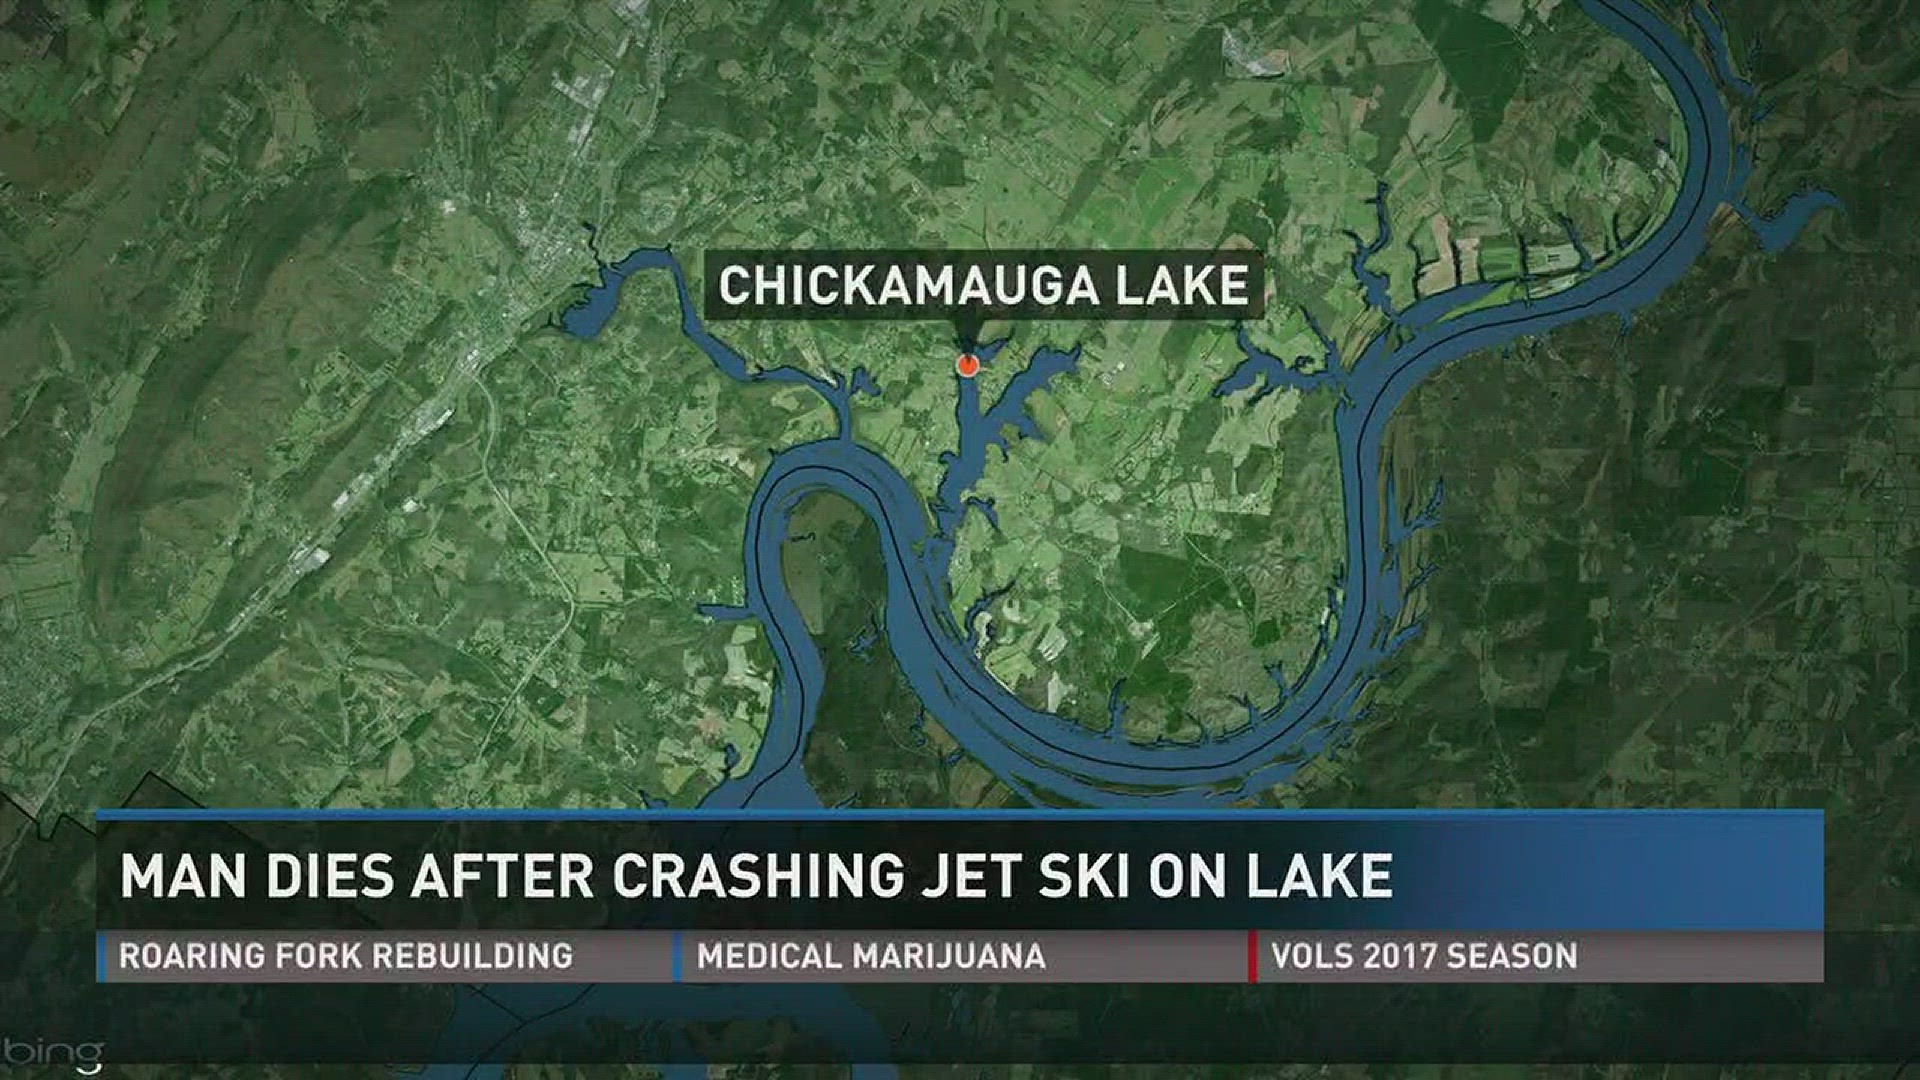 Jet skier dead on Chickamauga after crash